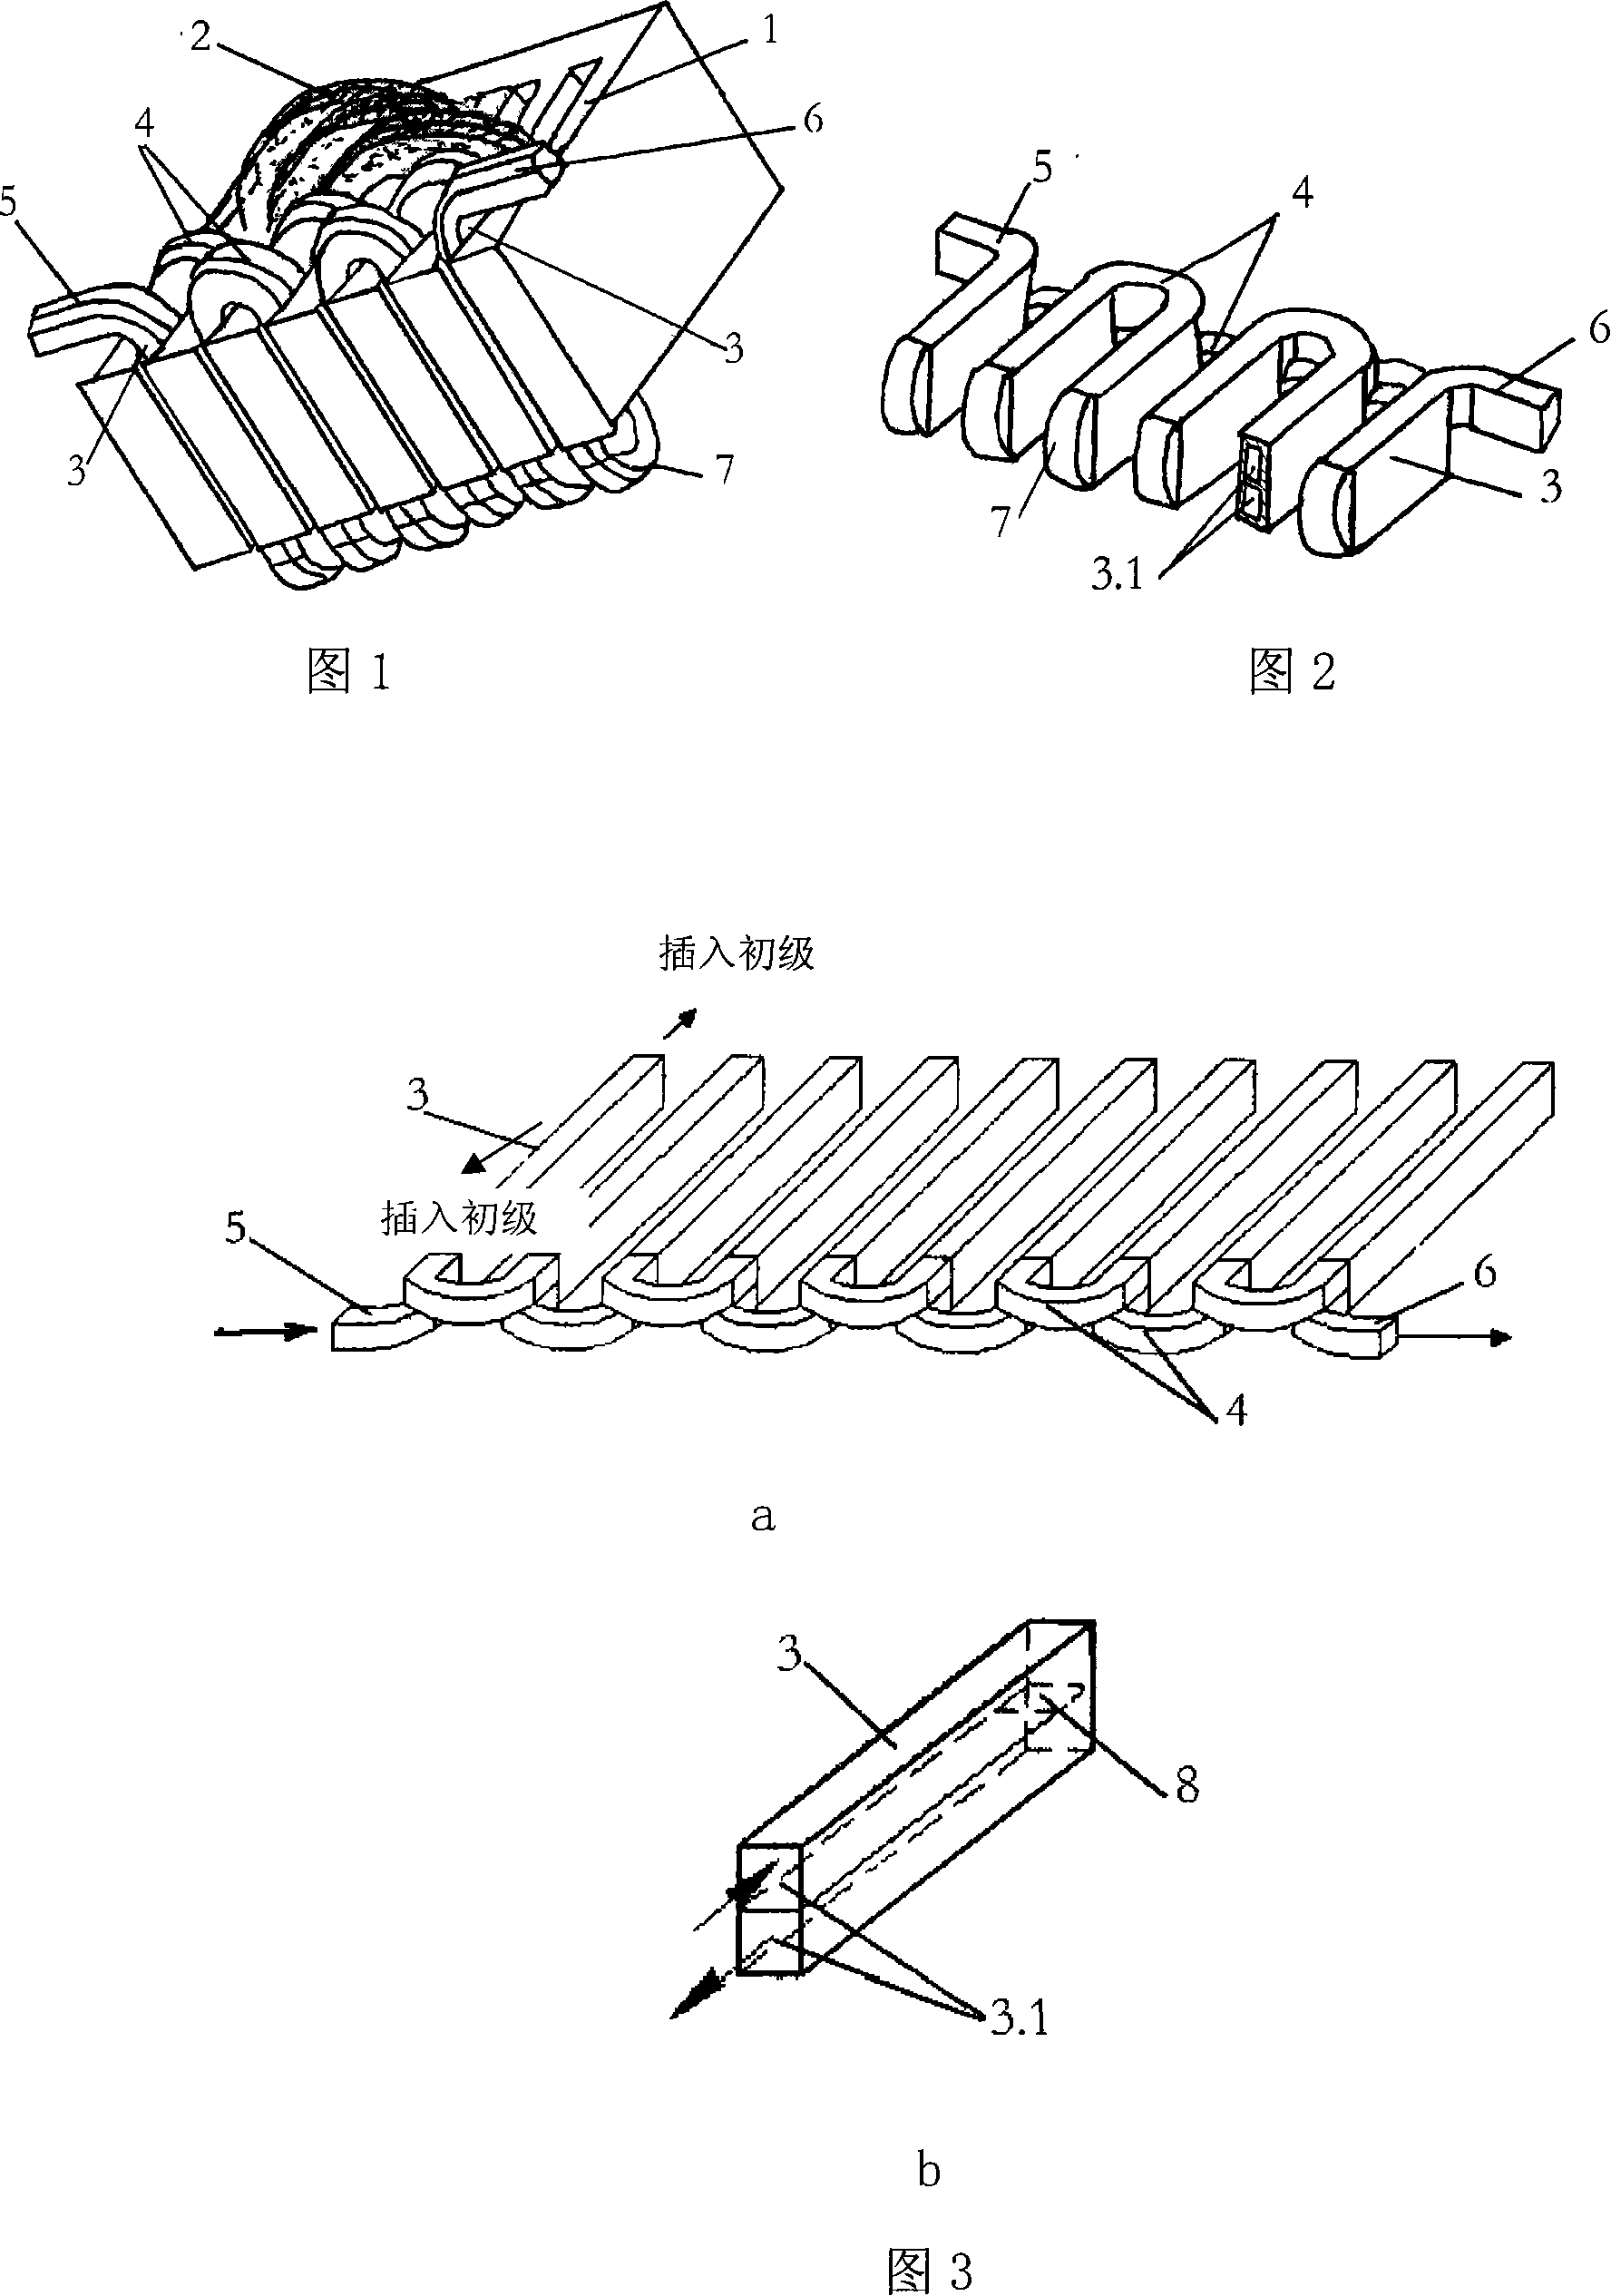 Linear motor radiator